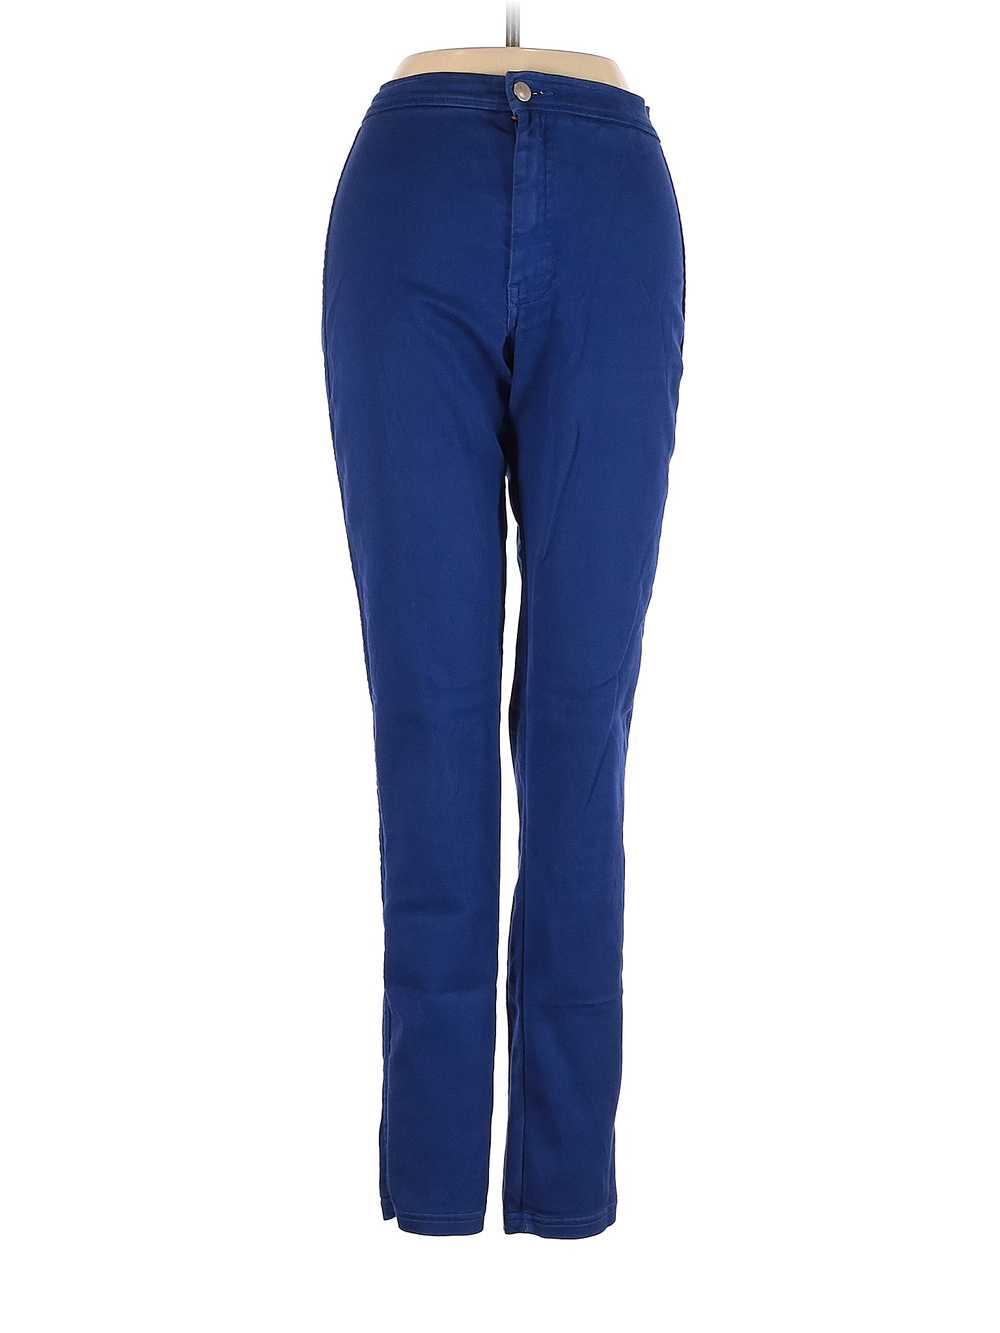 American Apparel Women Blue Jeans XXS - image 1